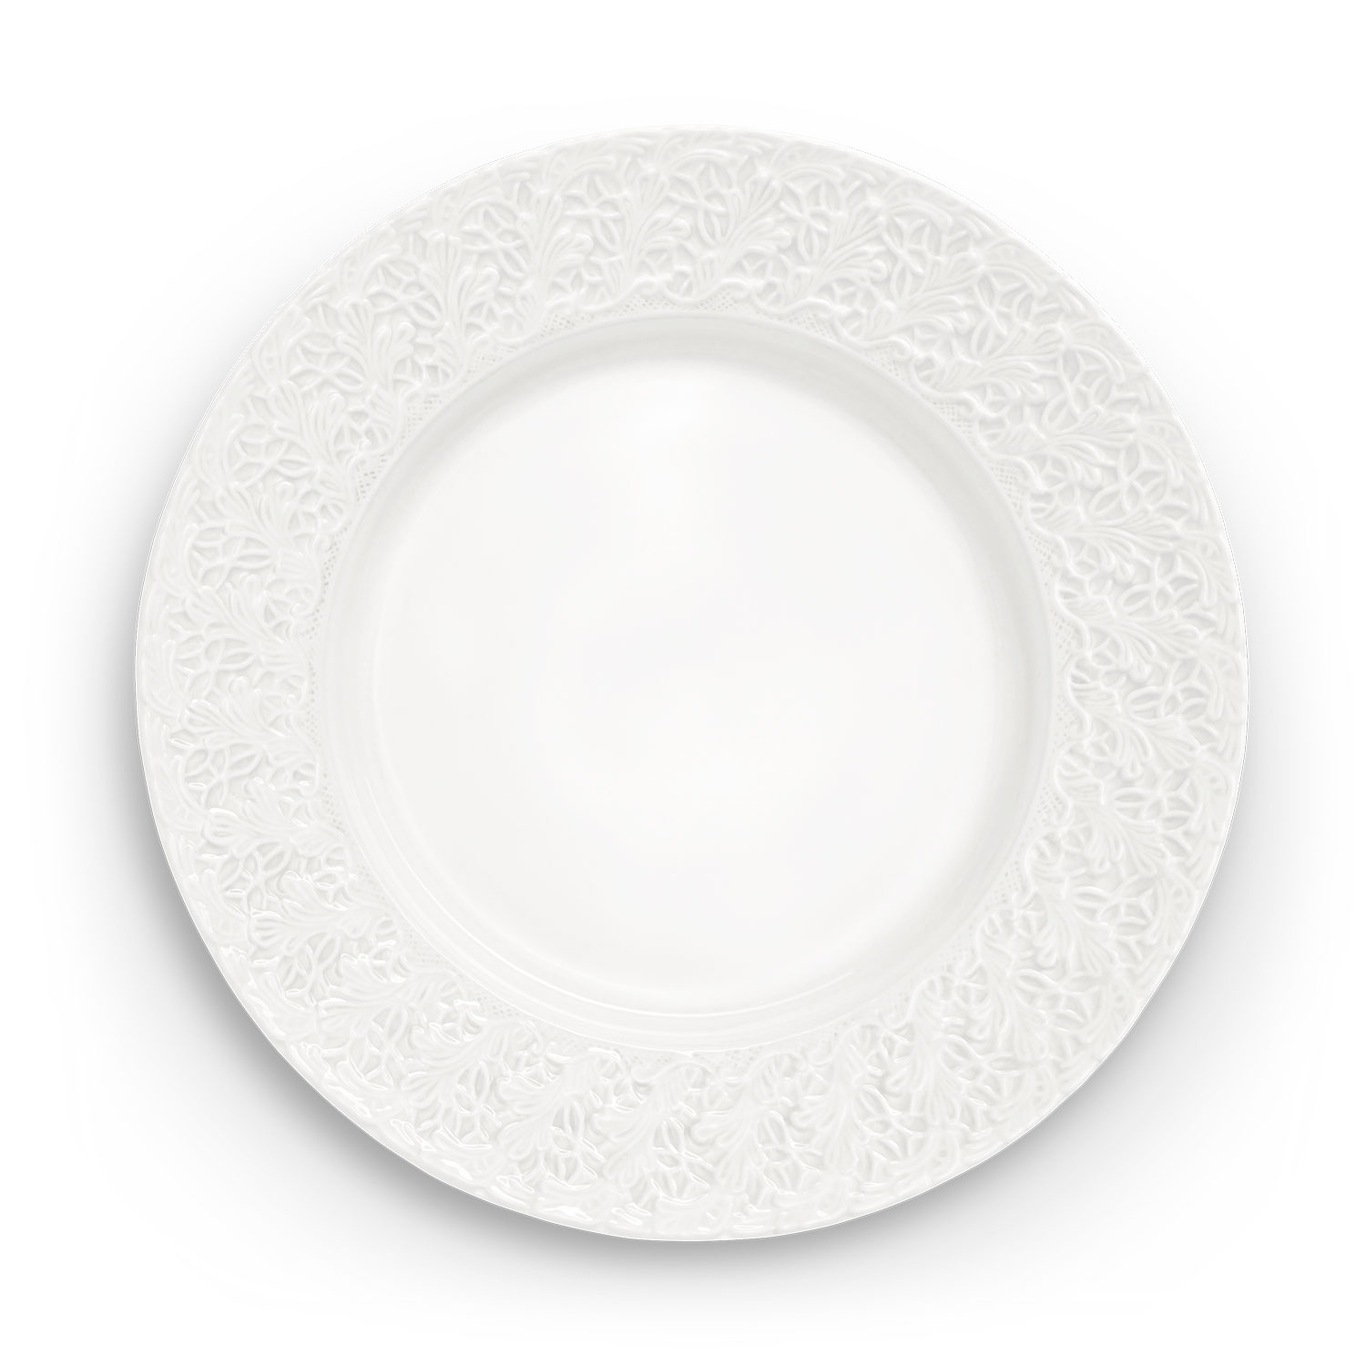 Lace Plate 32 cm, White